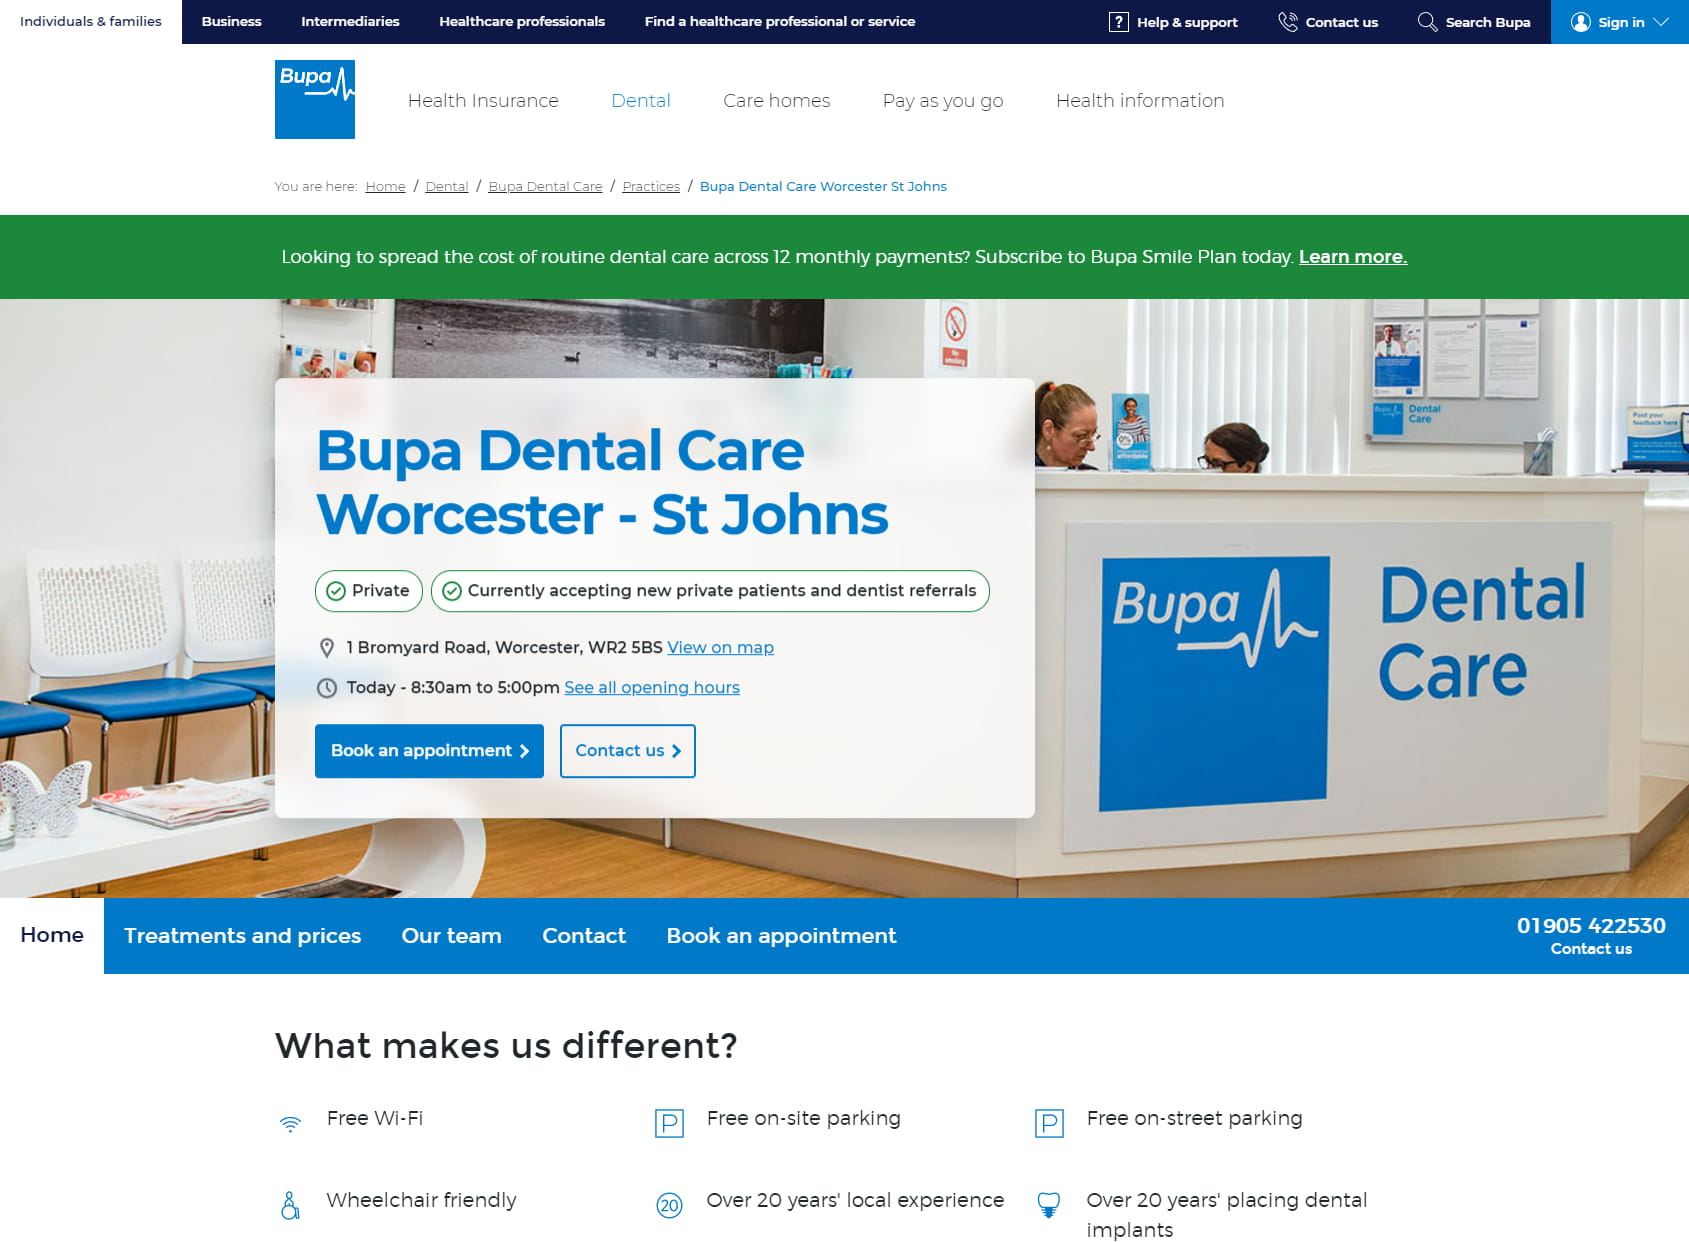 Bupa Dental Care Worcester - St Johns